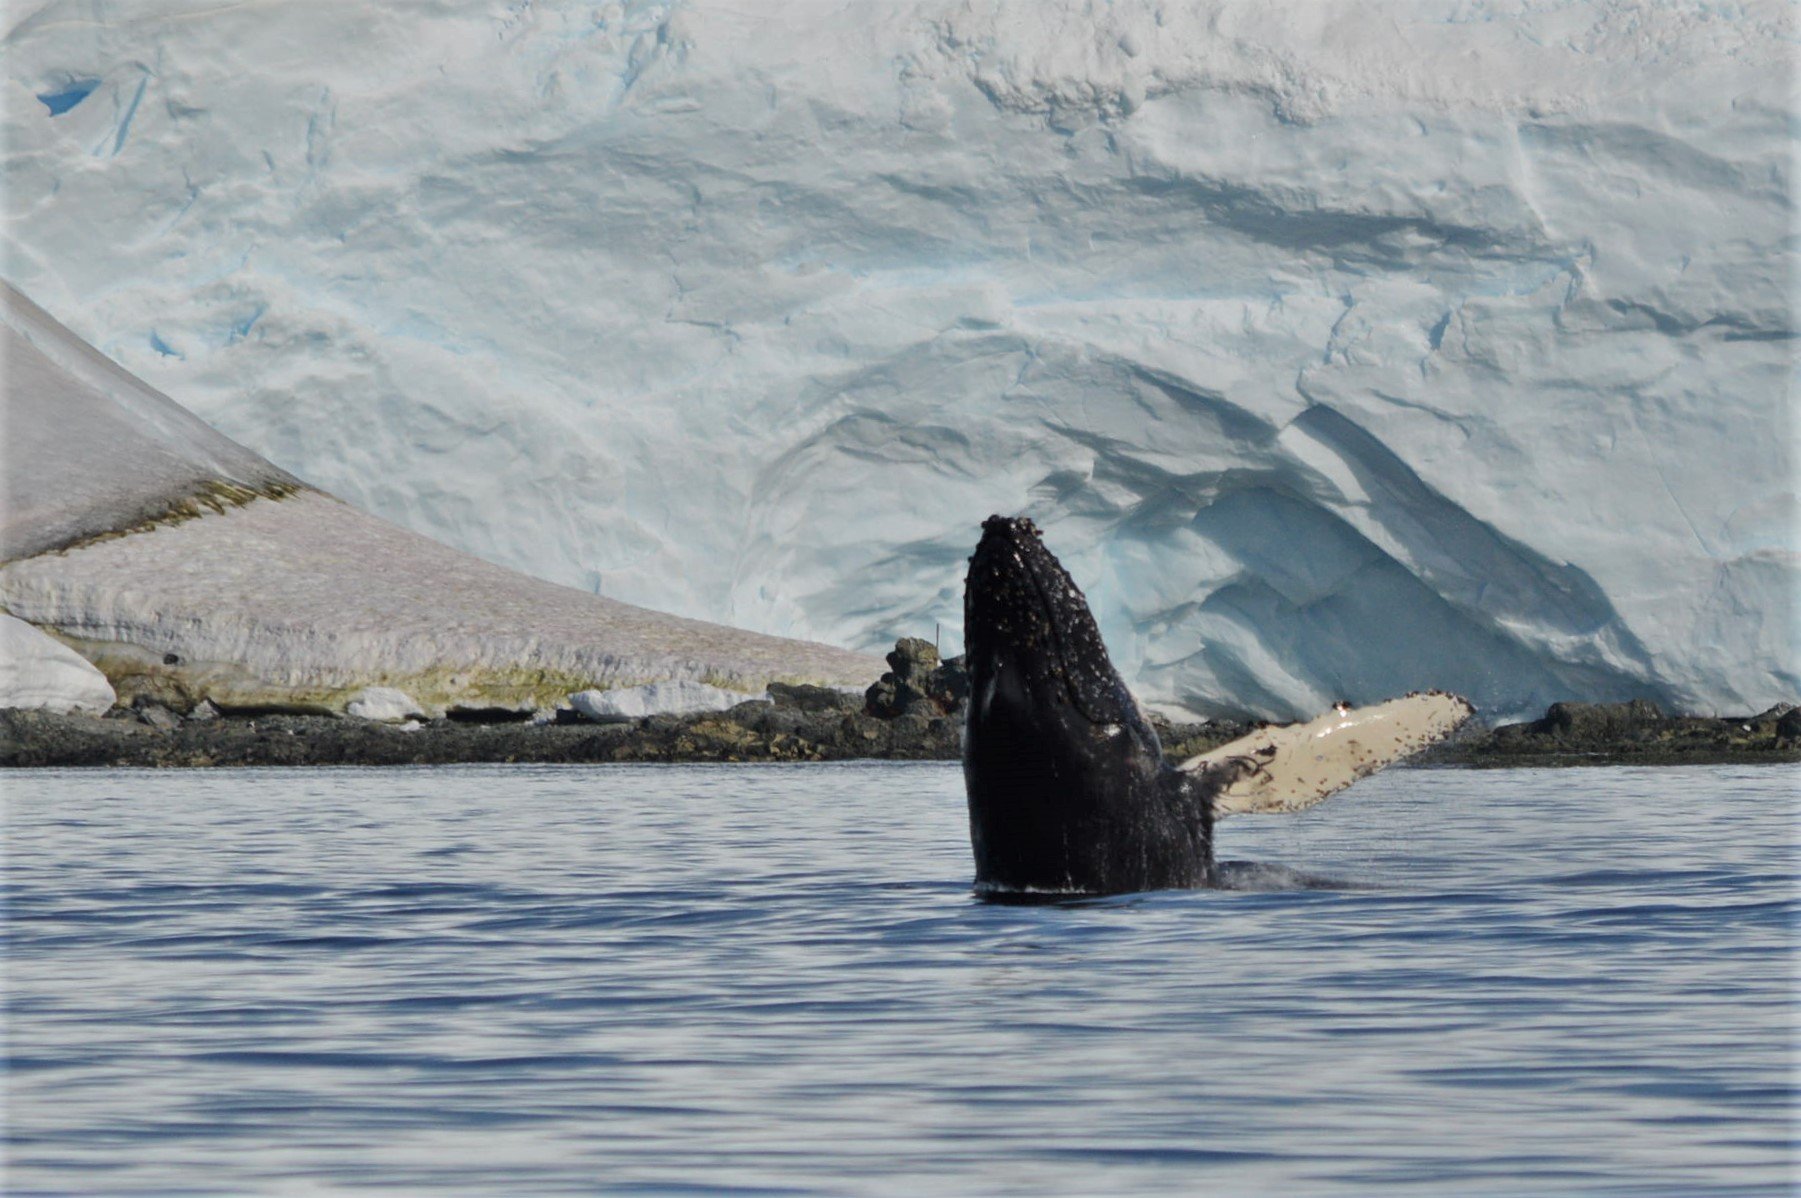 Whale encouner in Enterprise Island in Antarctica